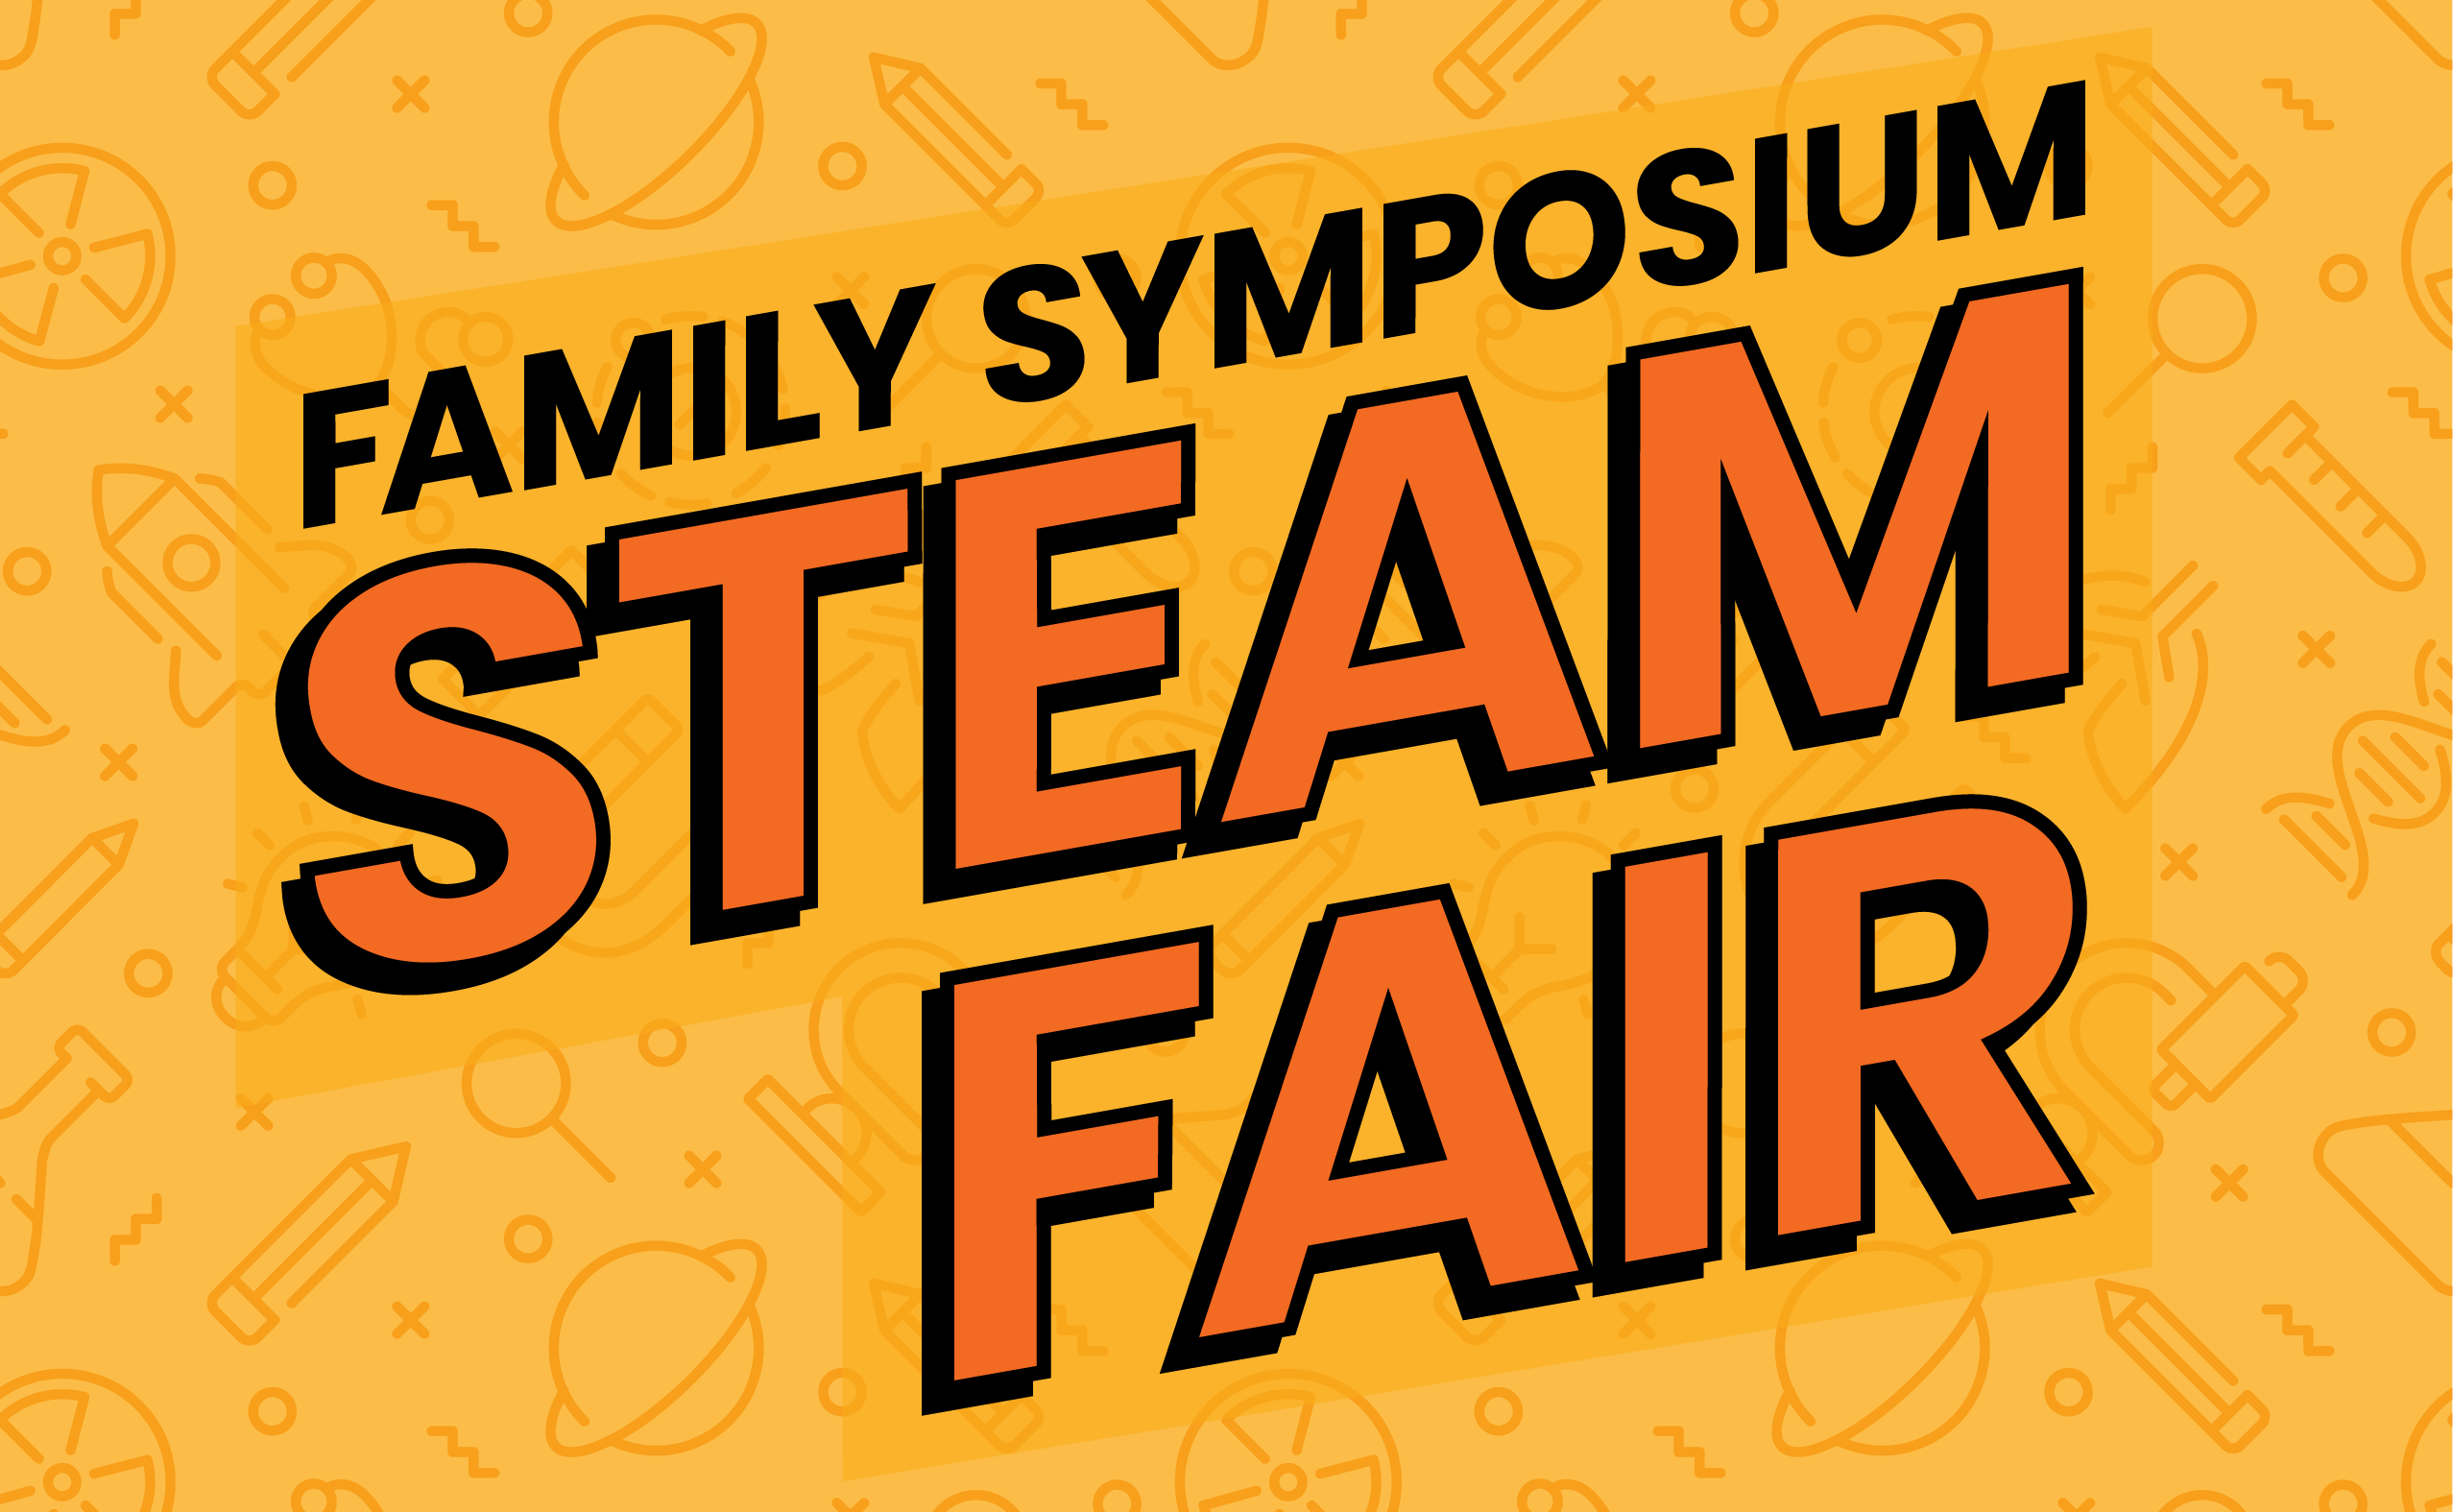 Family Symposium: STEAM fair for the Pikes Peak region - February